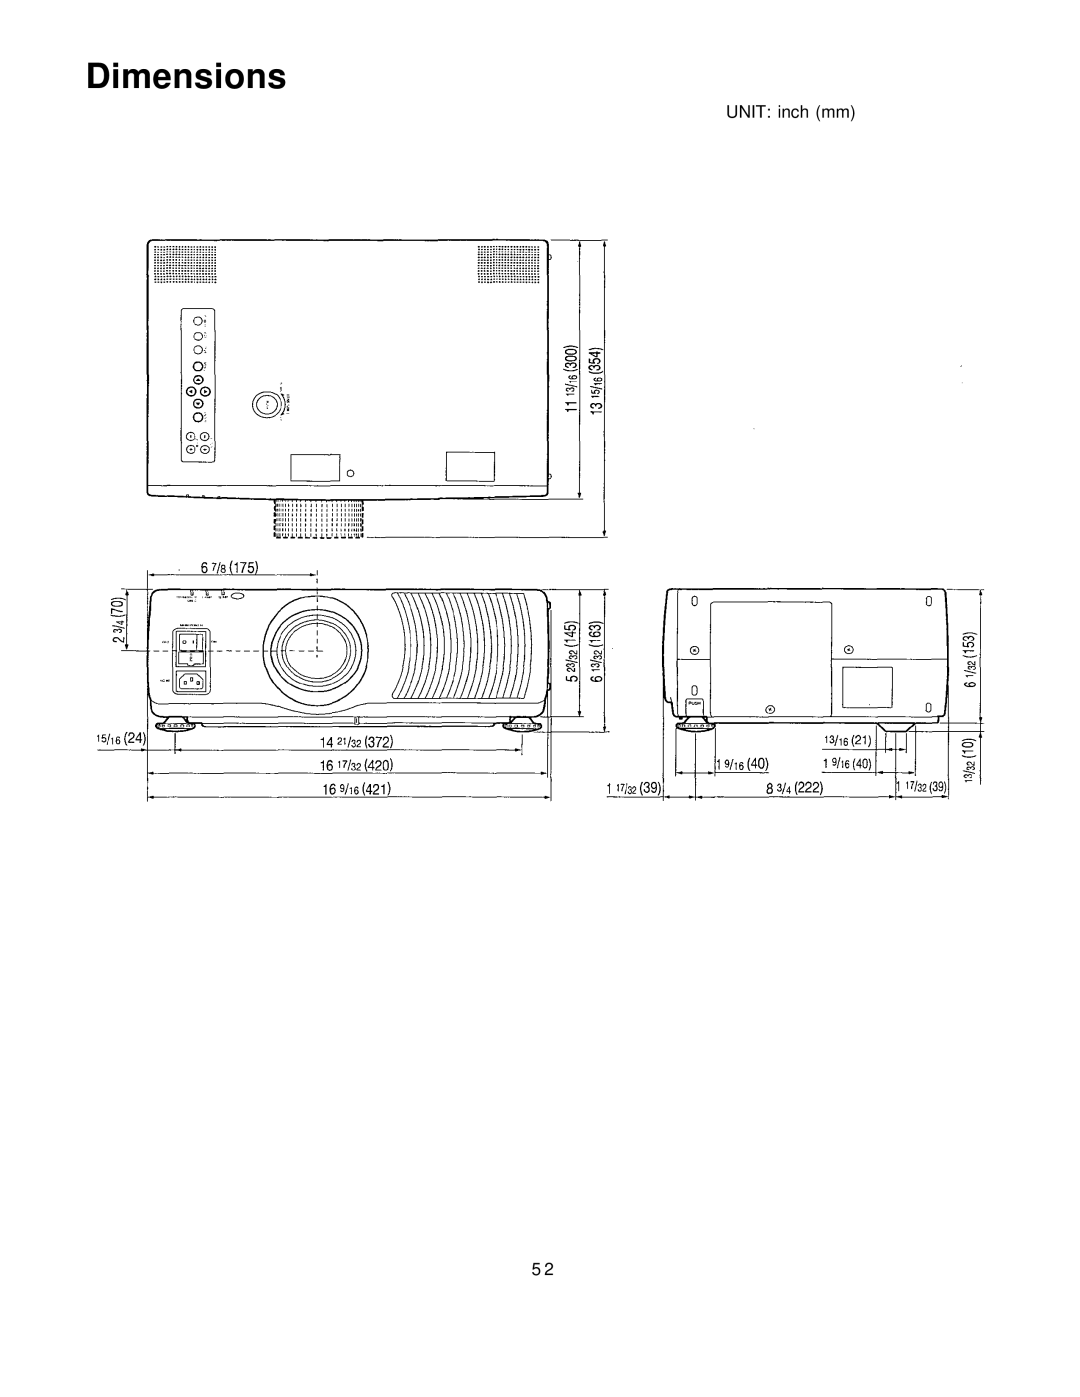 Panasonic PT-L795U manual Dimensions, UNIT inch mm 